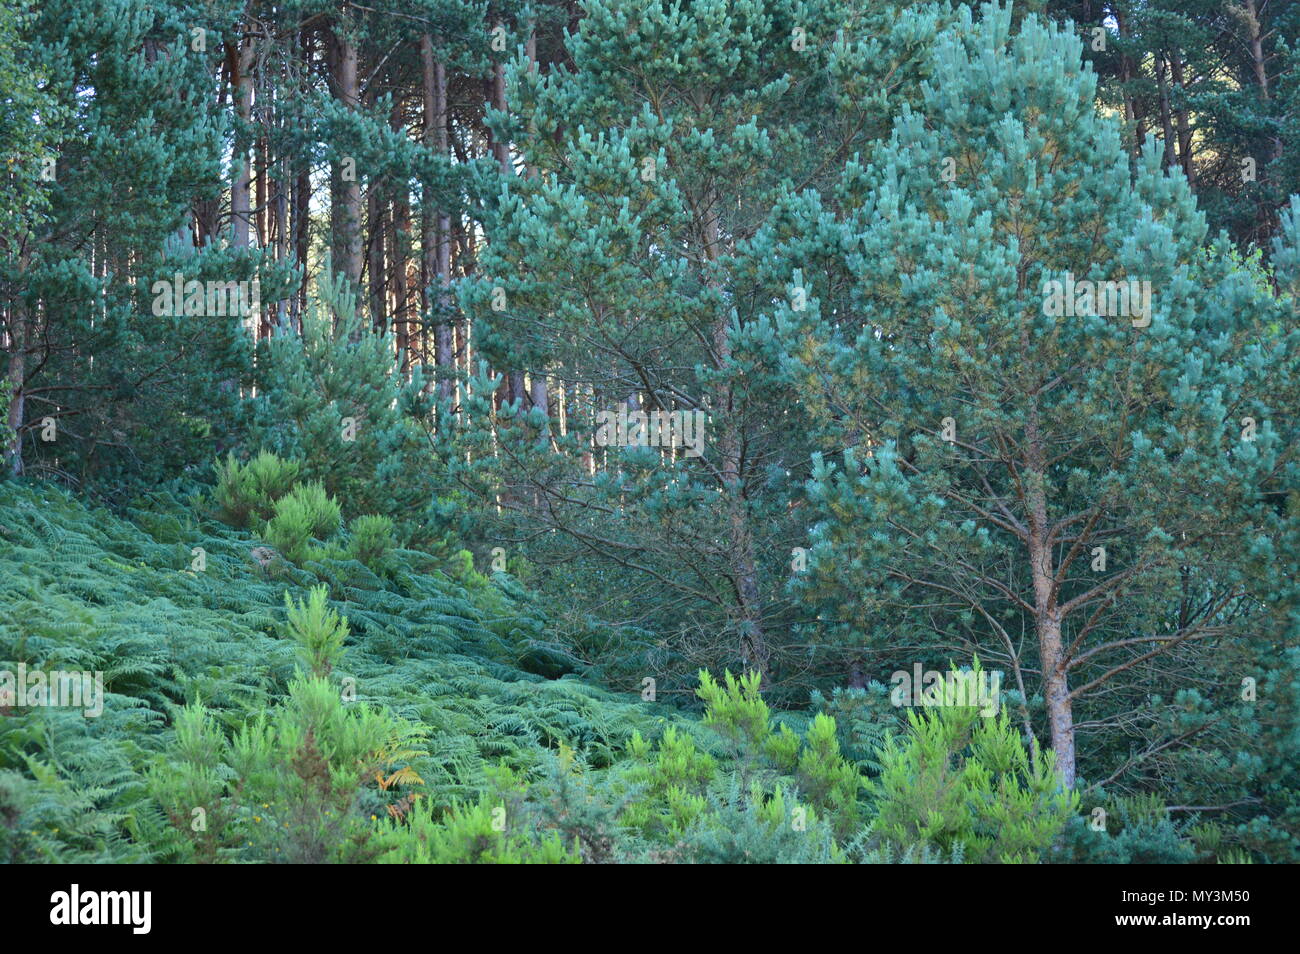 Leafy Eucalyptus Forest In The Mountains Of Galicia. Travel Landscape Botanic. August 18, 2016. Rebedul, Becerrea Lugo Galicia Spain. Stock Photo